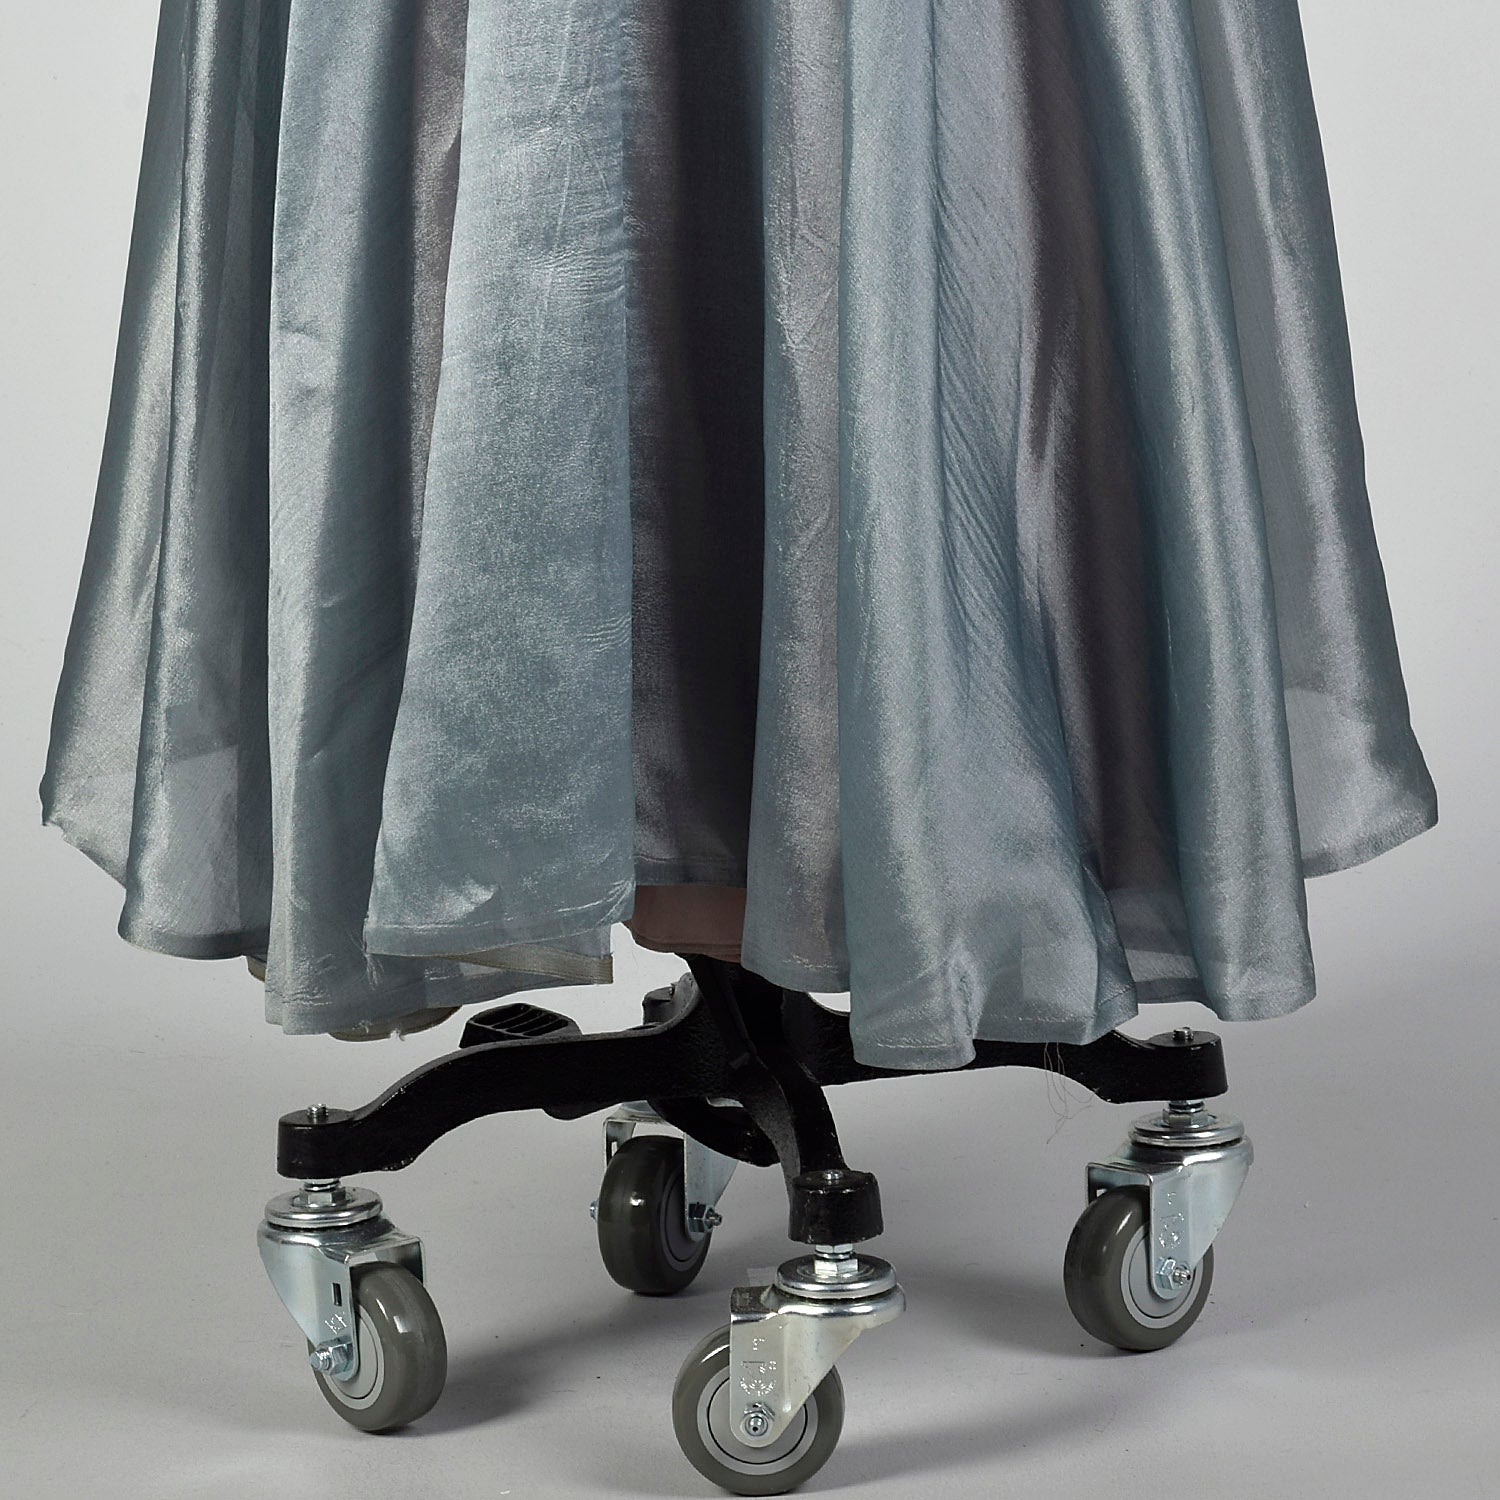 Medium 1950s Blue Long Formal Gown